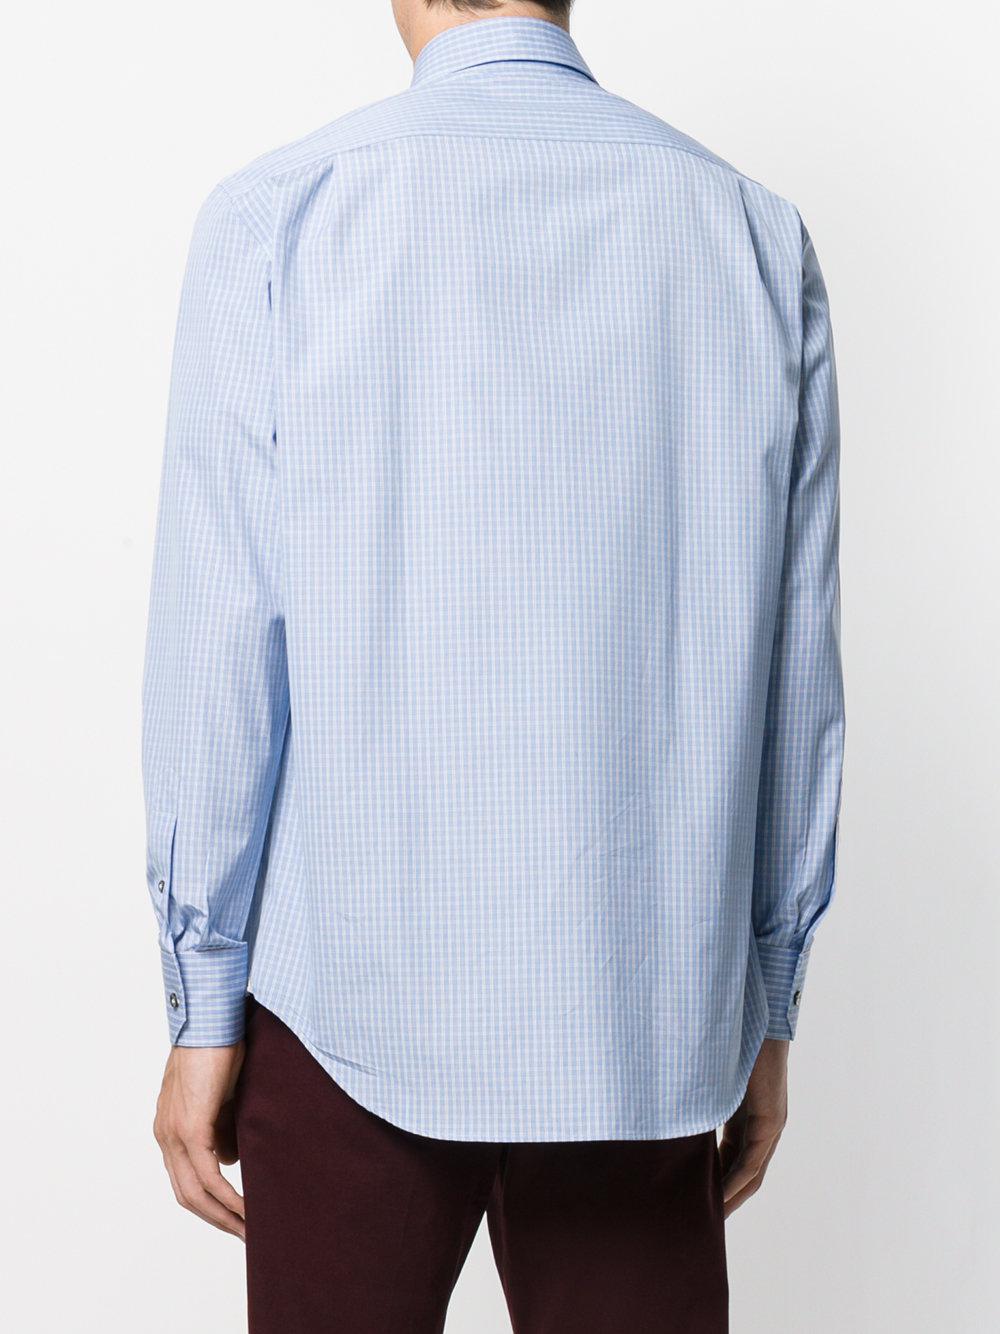 Lanvin Cotton Long-sleeved Shirt in Blue for Men - Lyst